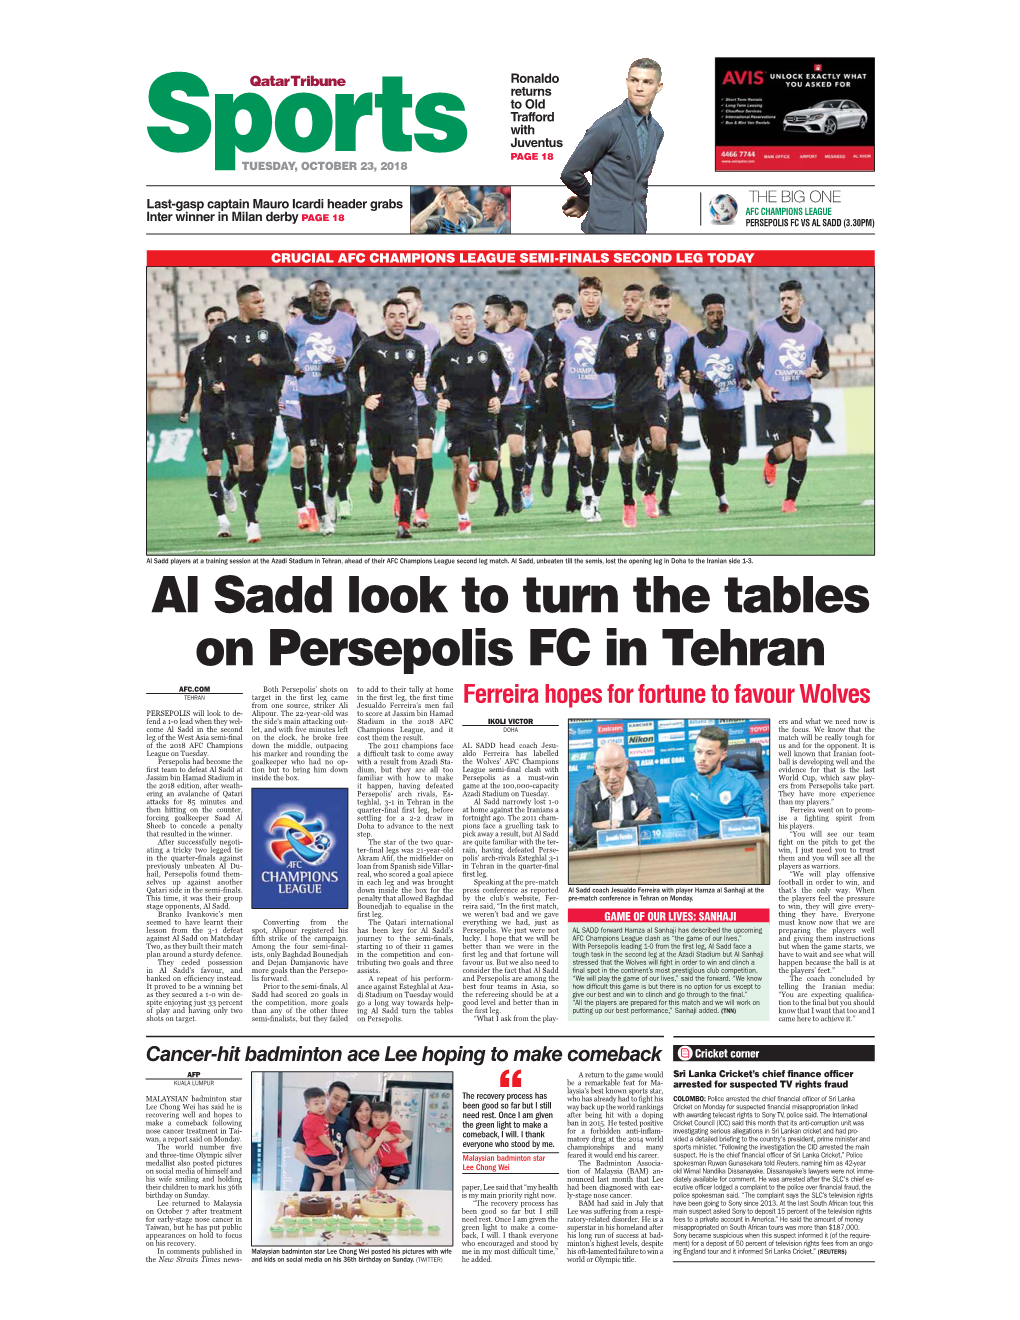 Al Sadd Look to Turn the Tables on Persepolis FC in Tehran